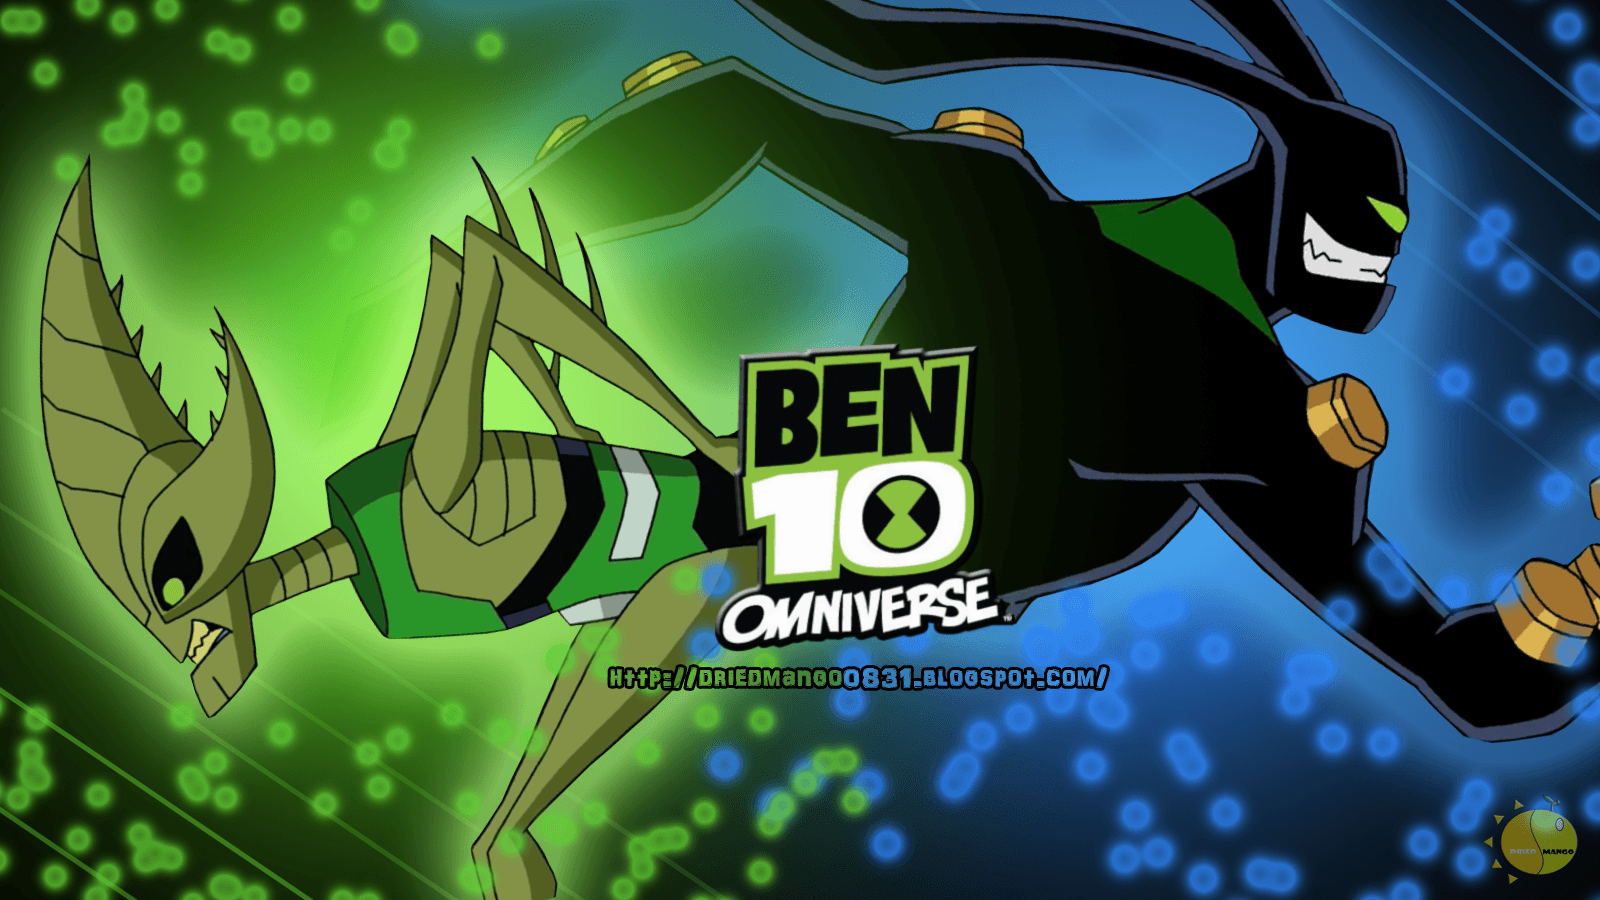 Ben 10 Omniverse image Crashhopper HD wallpaper and background